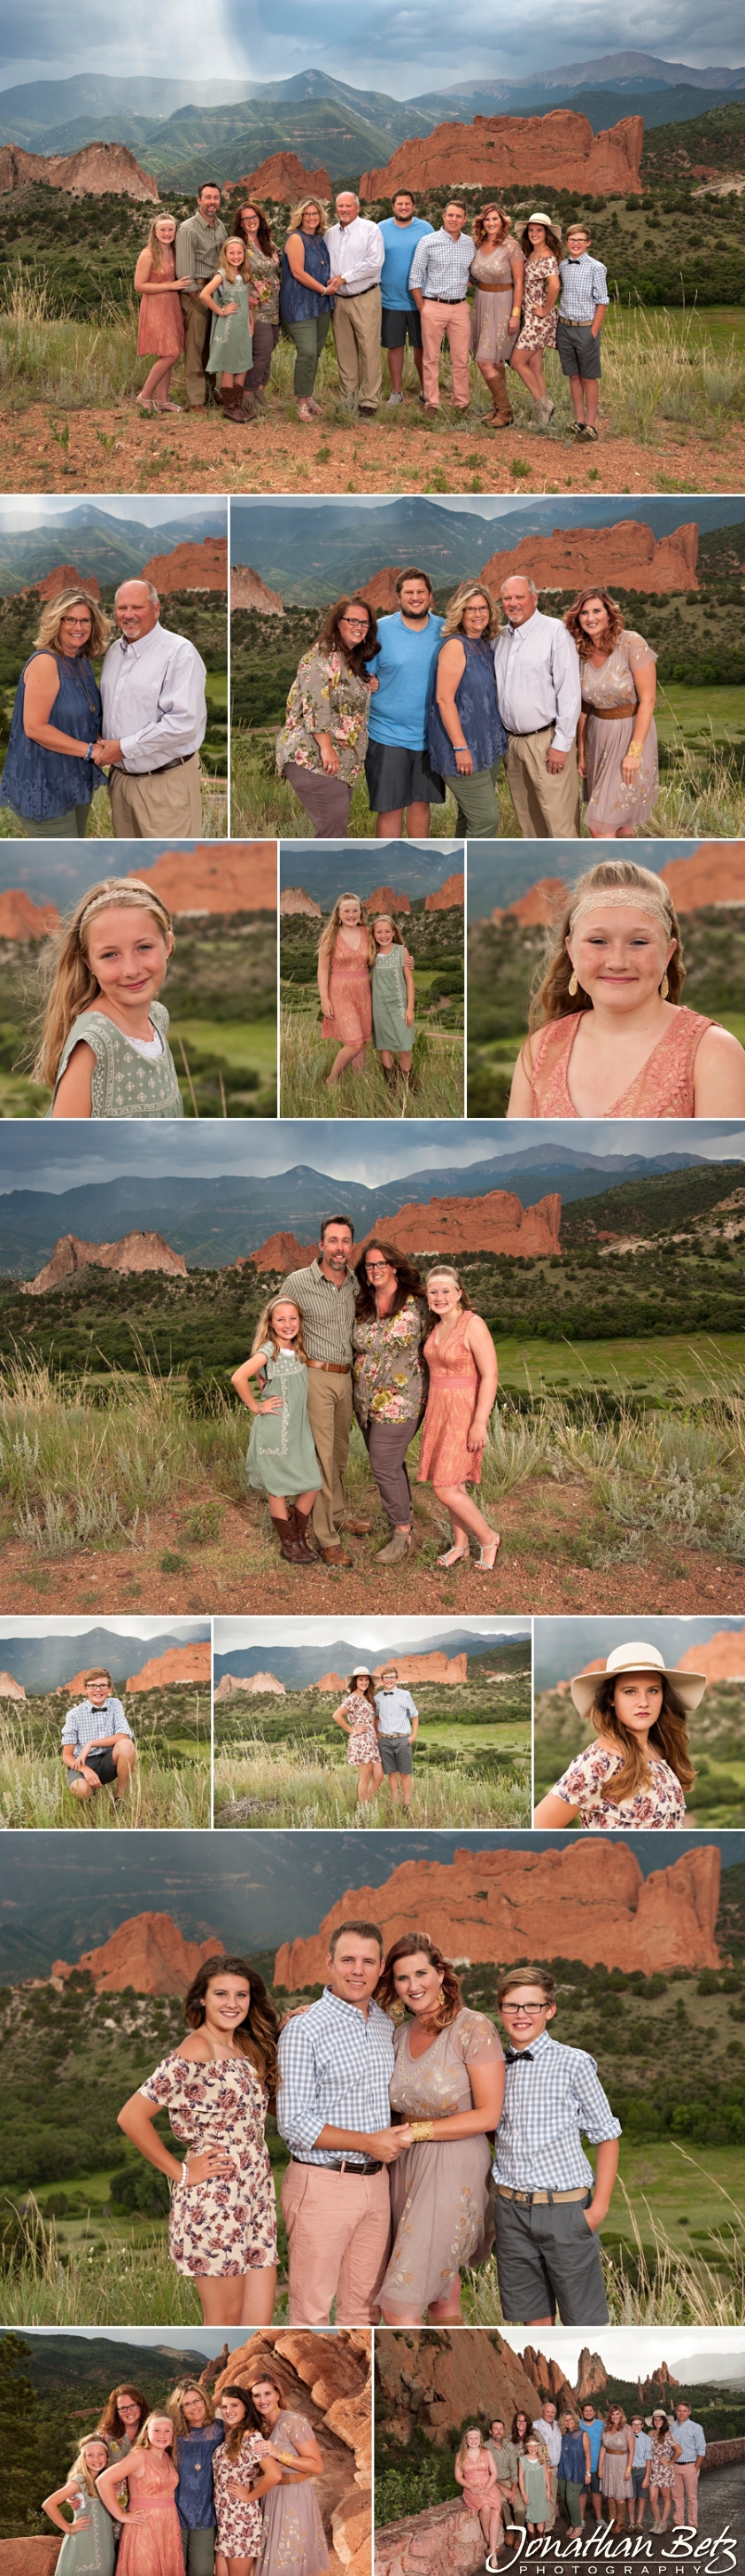 Jonathan Betz Photography Multi-Family Portrait Photographer Colorado Springs